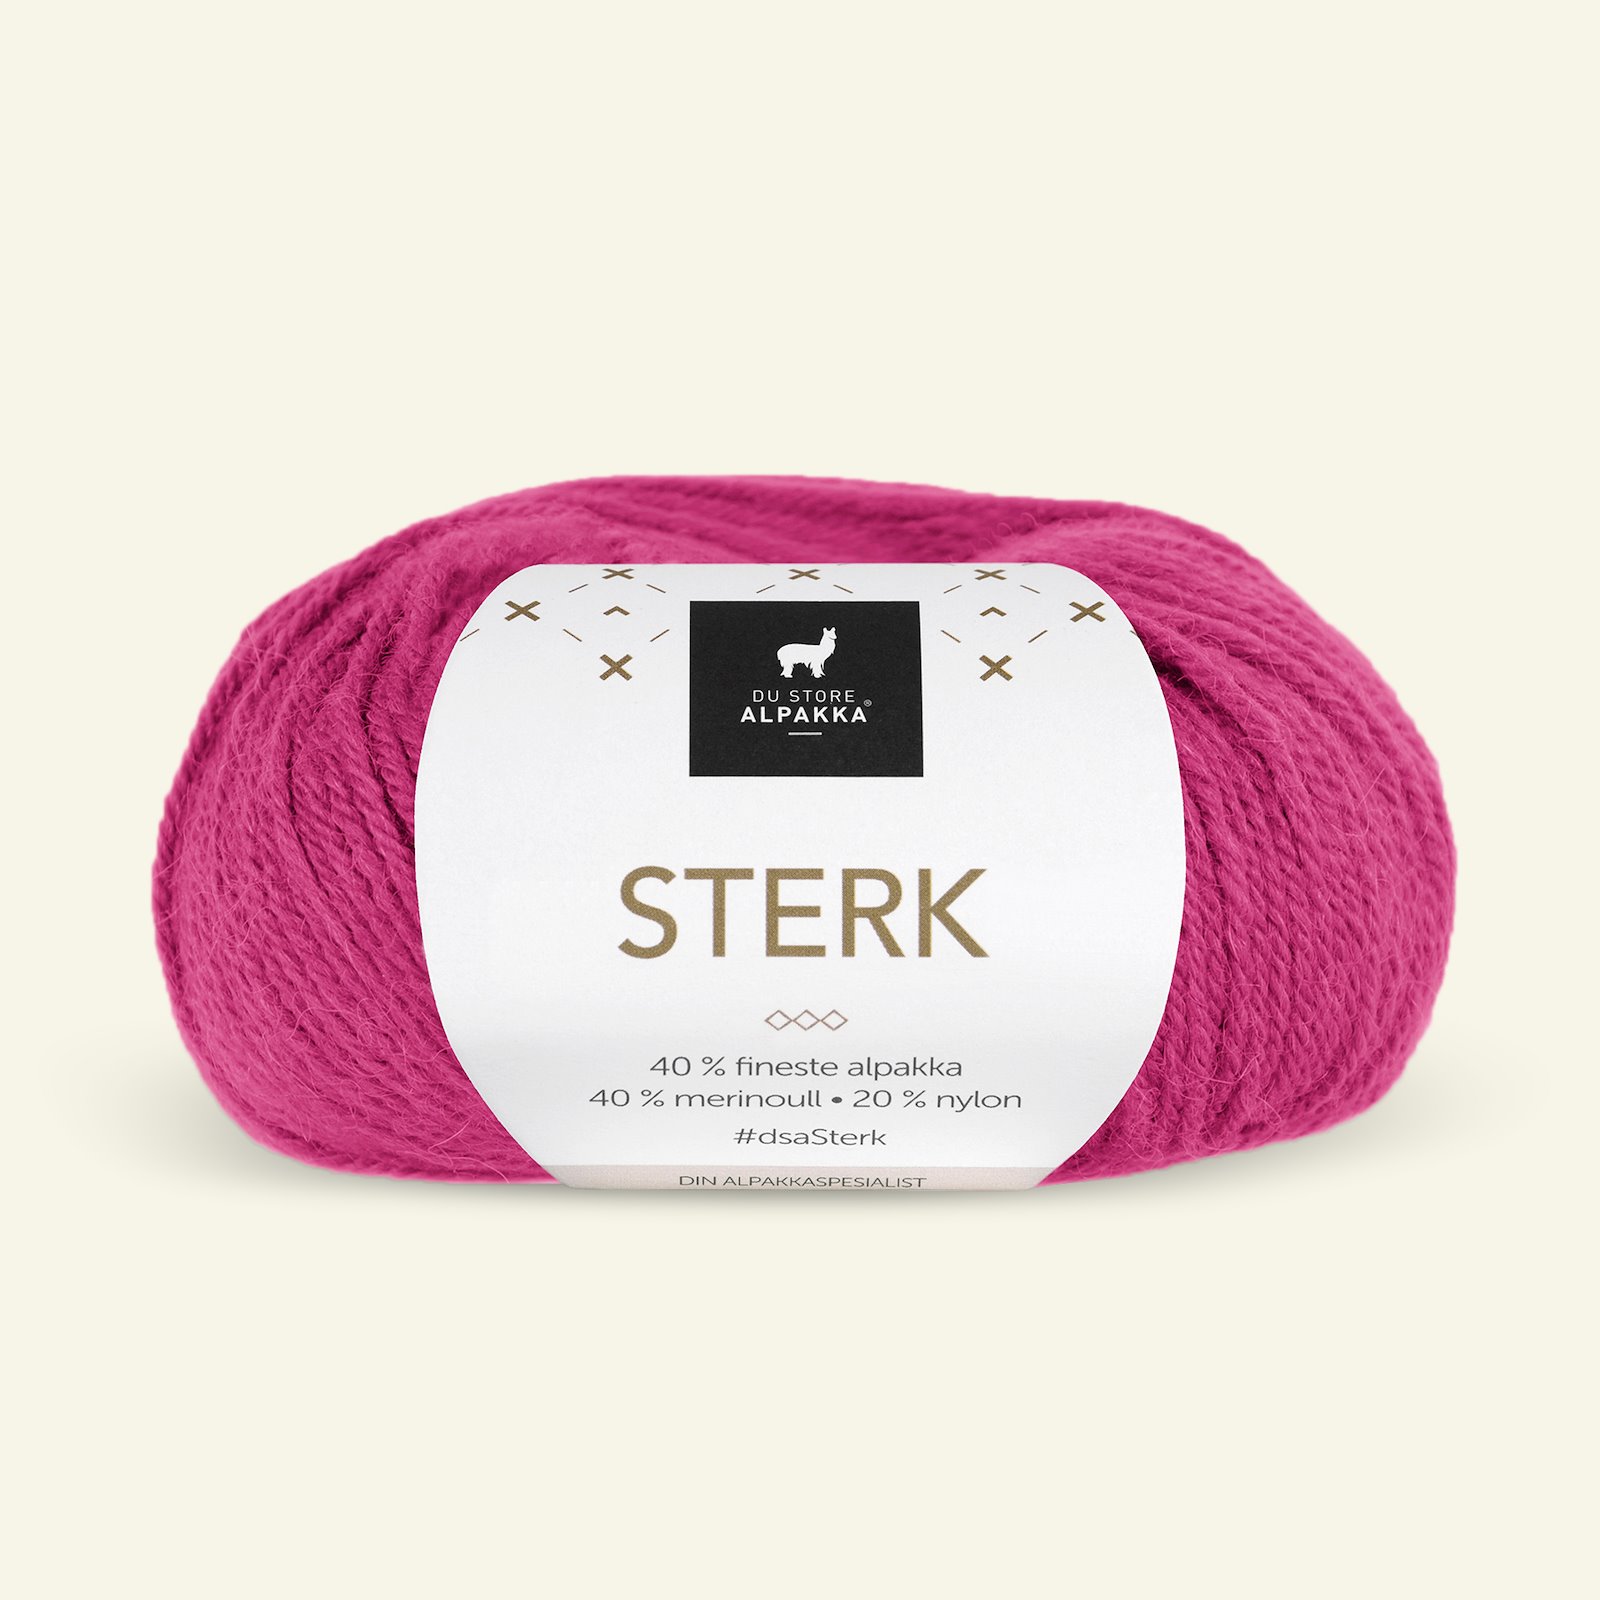 Du Store Alpakka, alpaca merino mixed yarn "Sterk", pink (825) 90000666_pack